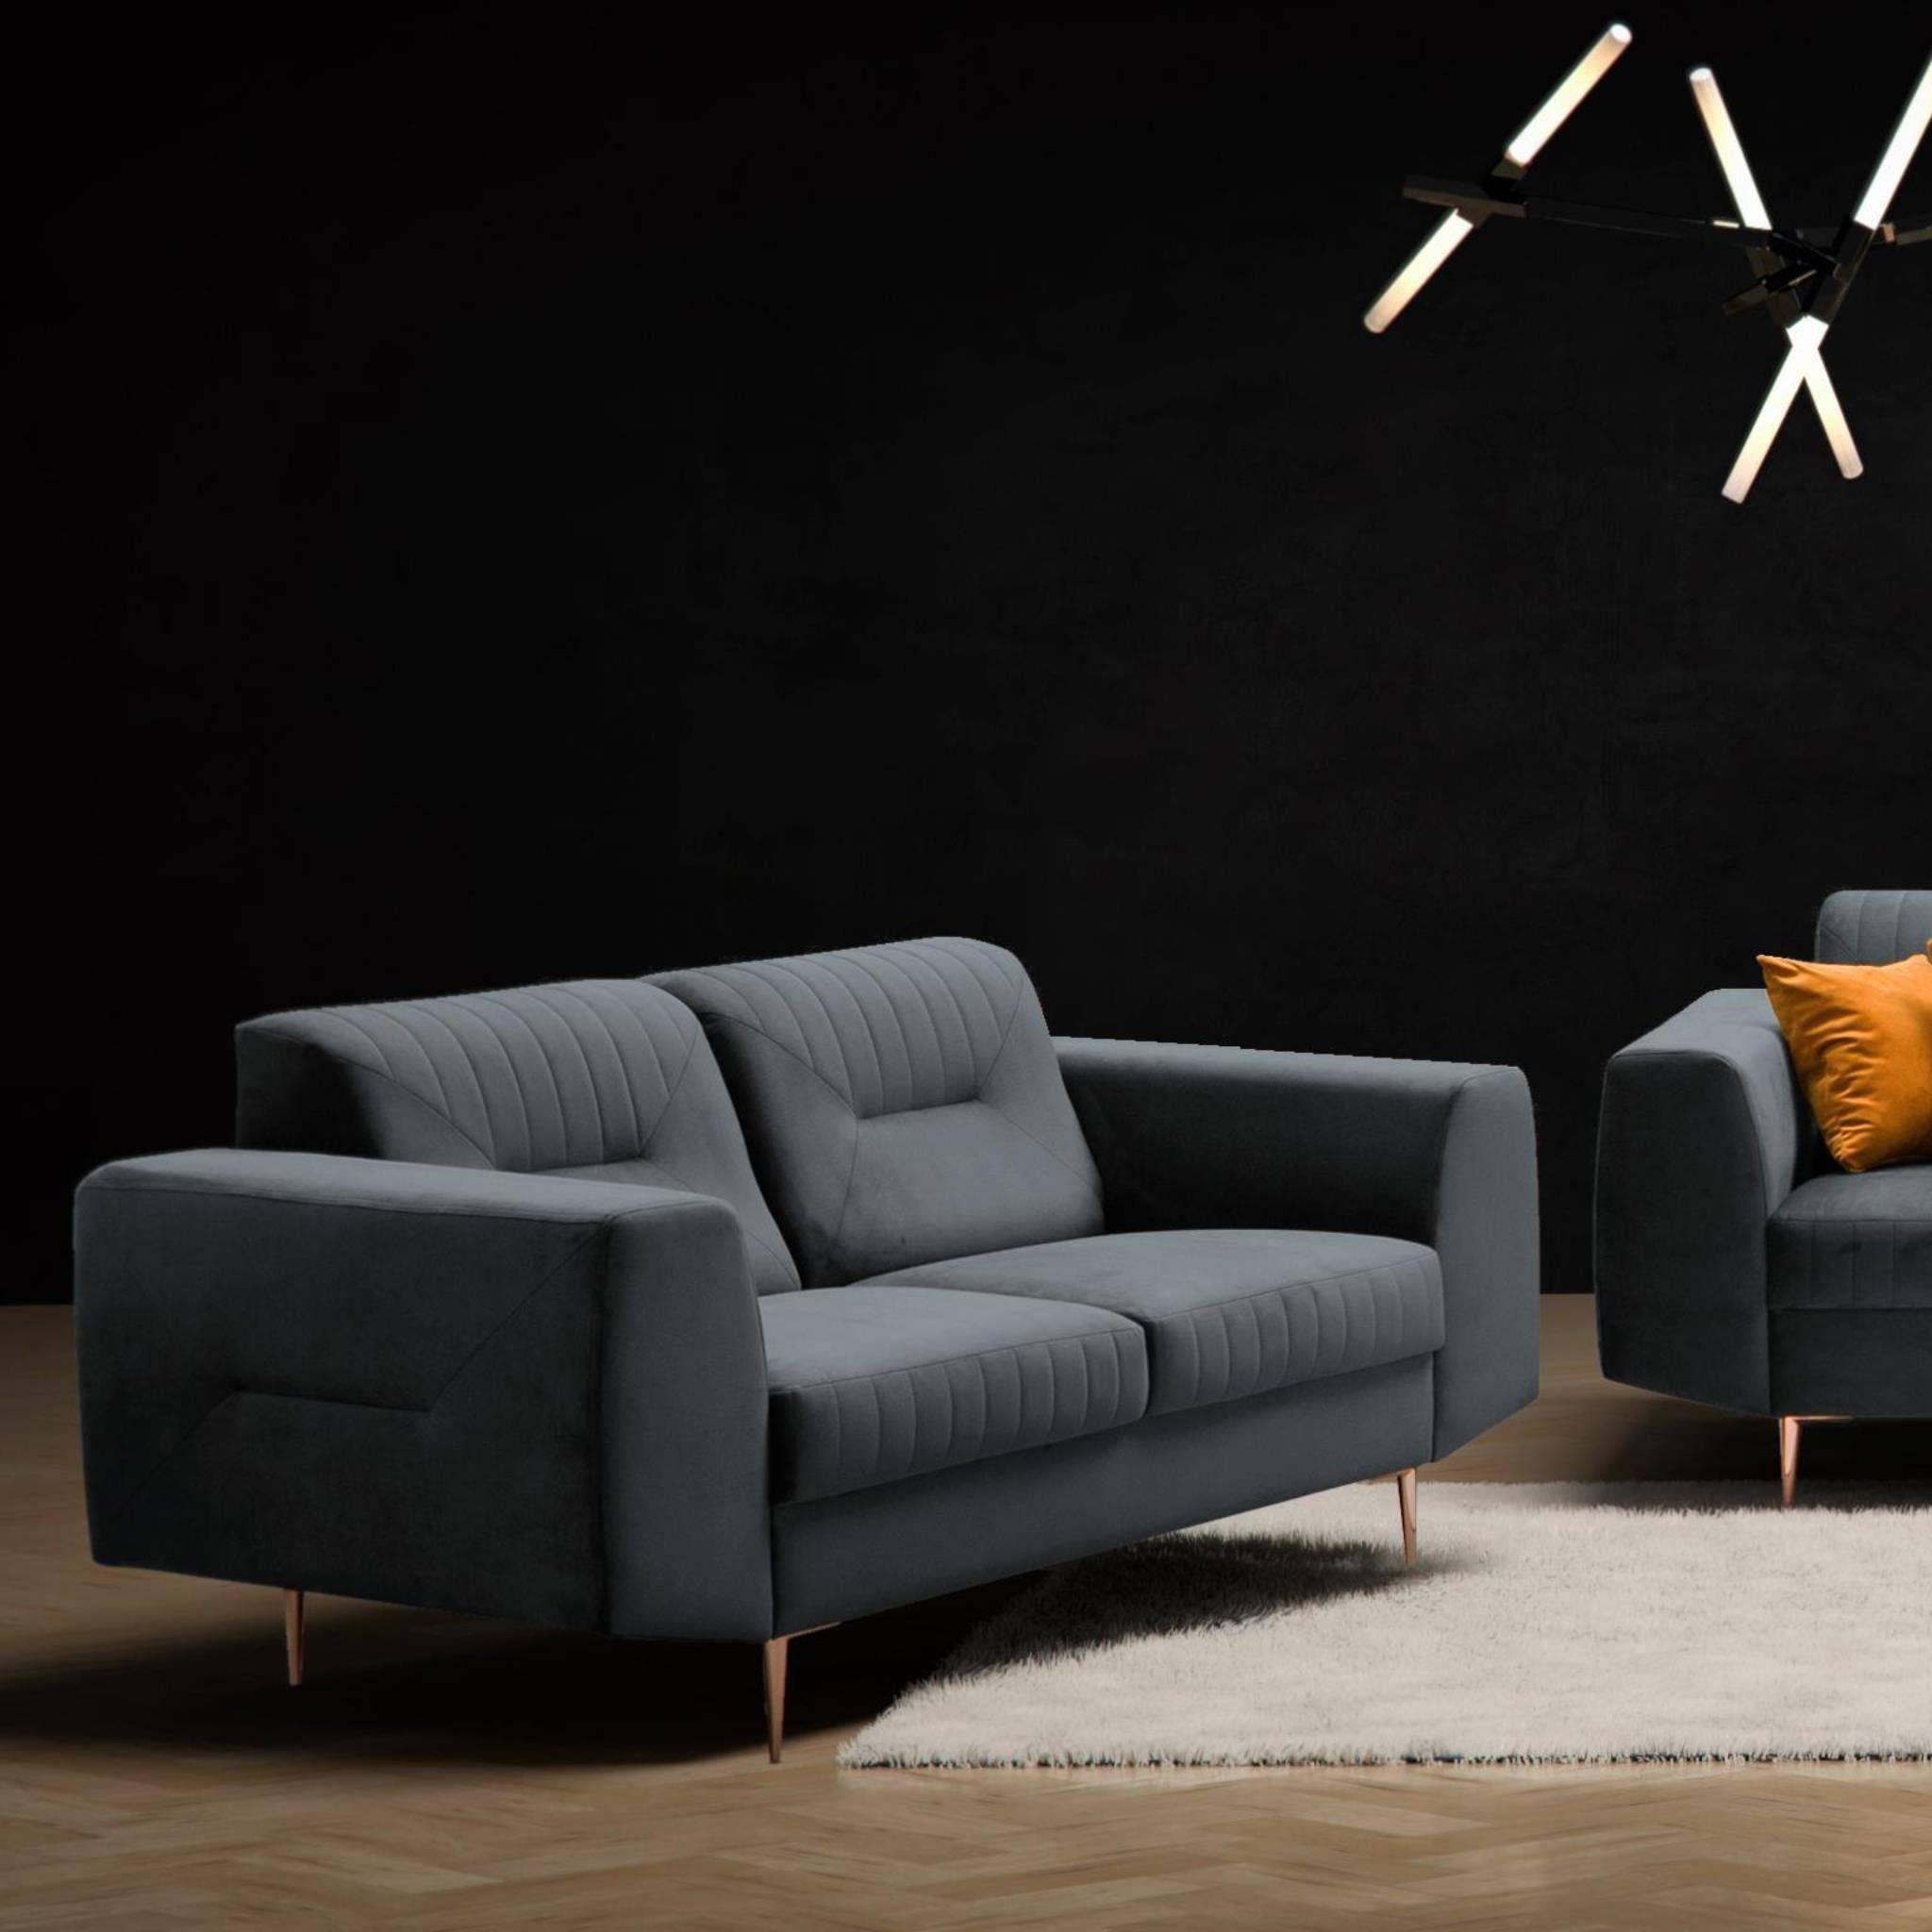 Beautysofa 2-Sitzer VENEZIA, Relaxsofa im modernes Design, mit Metallbeine,  Zweisitzer Sofa aus Velours